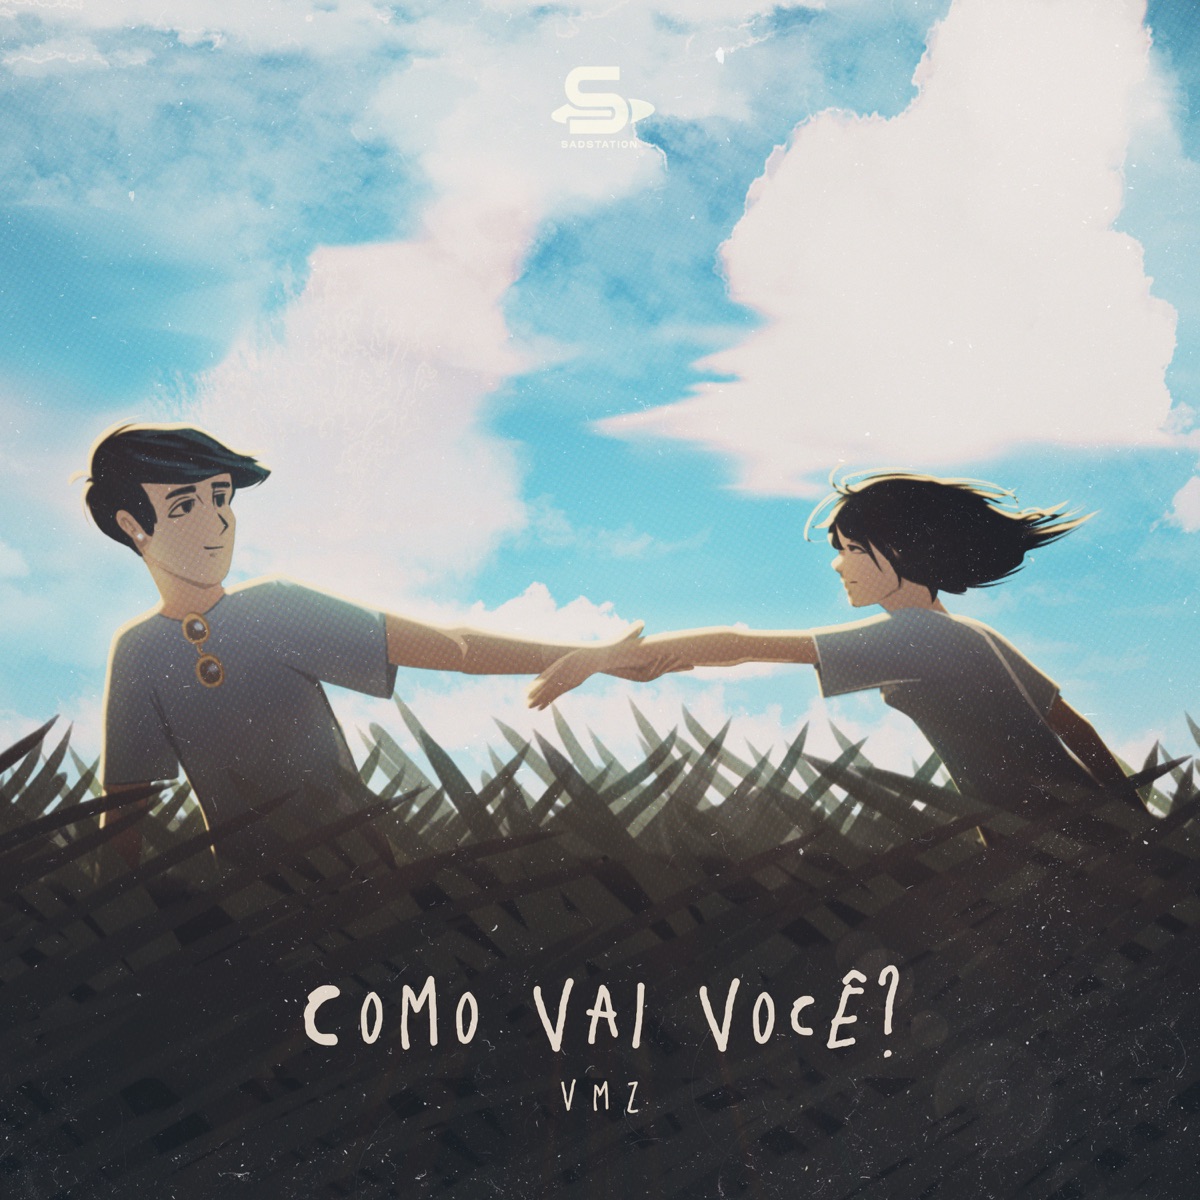 A Dama e o Vagabundo - song and lyrics by VMZ, Sadstation